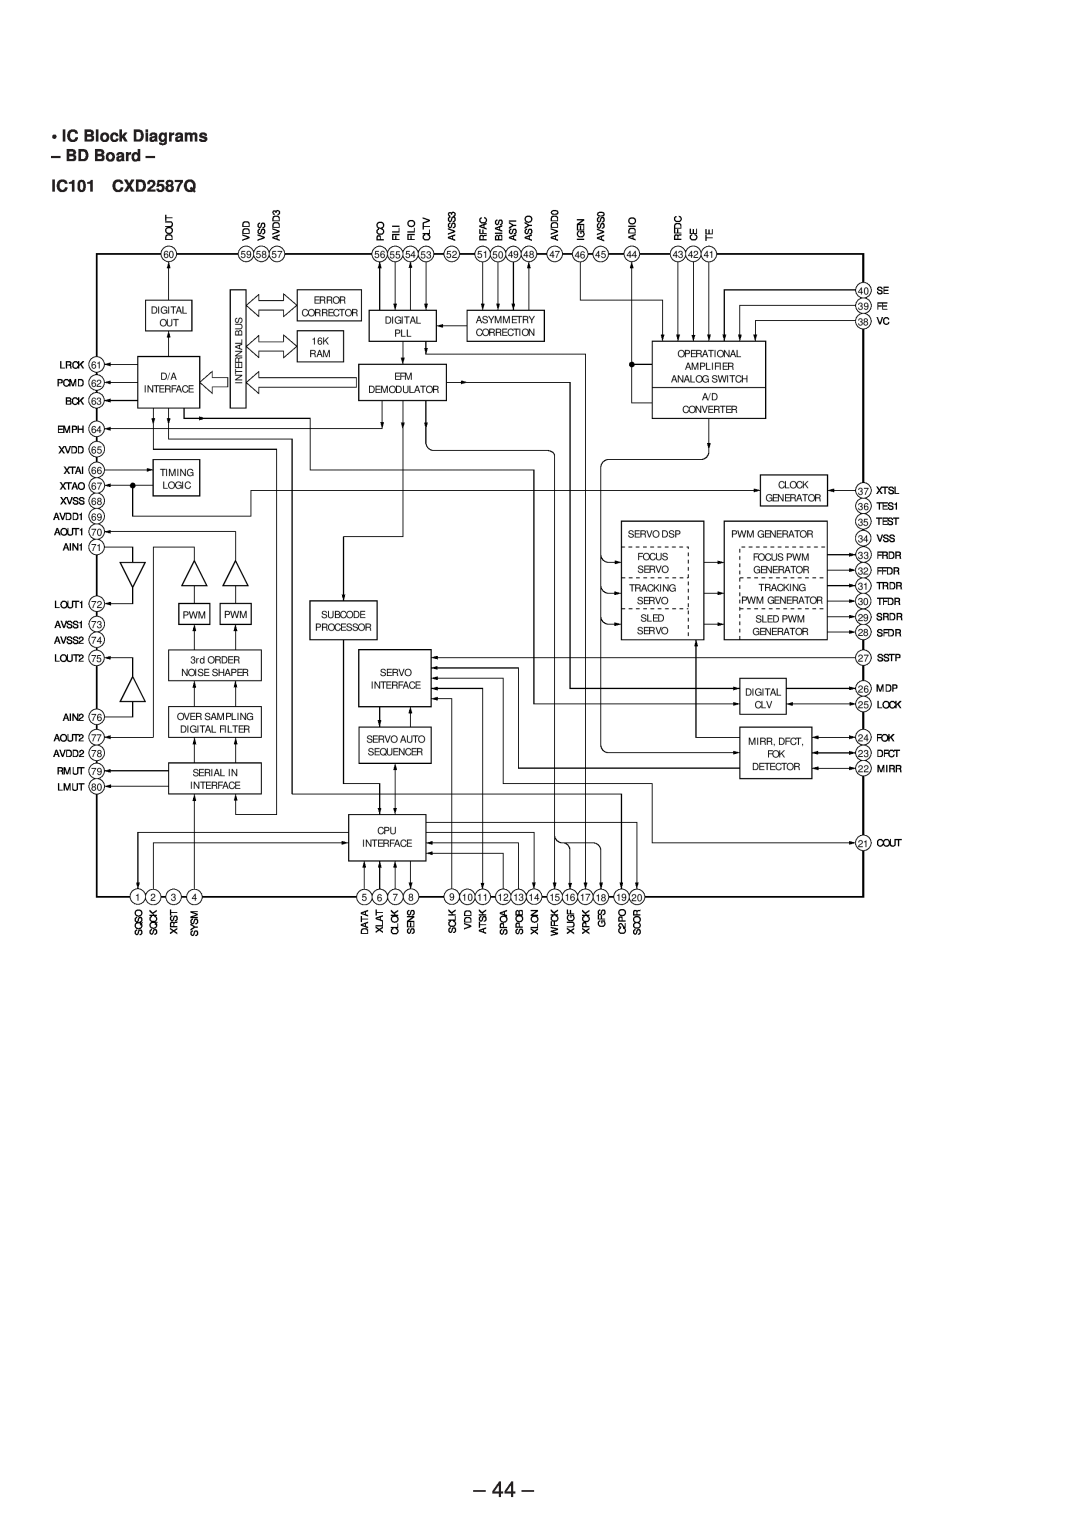 Sony Ericsson CDP-CX220 service manual IC Block Diagrams - BD Board, IC101, CXD2587Q 